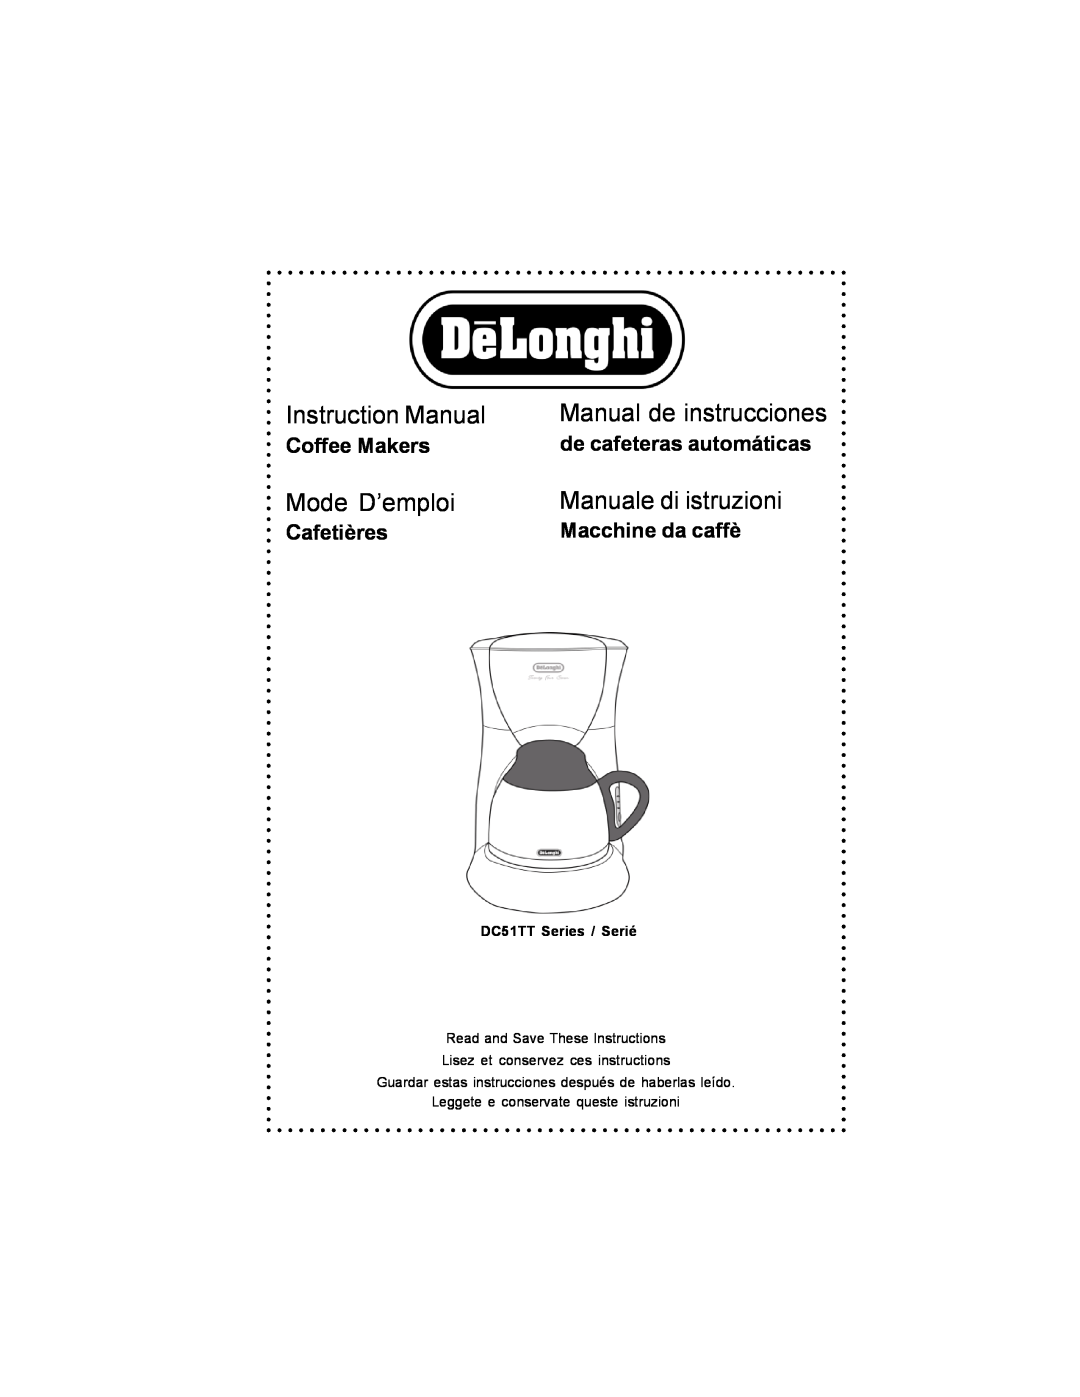 DeLonghi Coffee Makers instruction manual de cafeteras automáticas, Cafetières, Macchine da caffè, Manual de instrucciones 